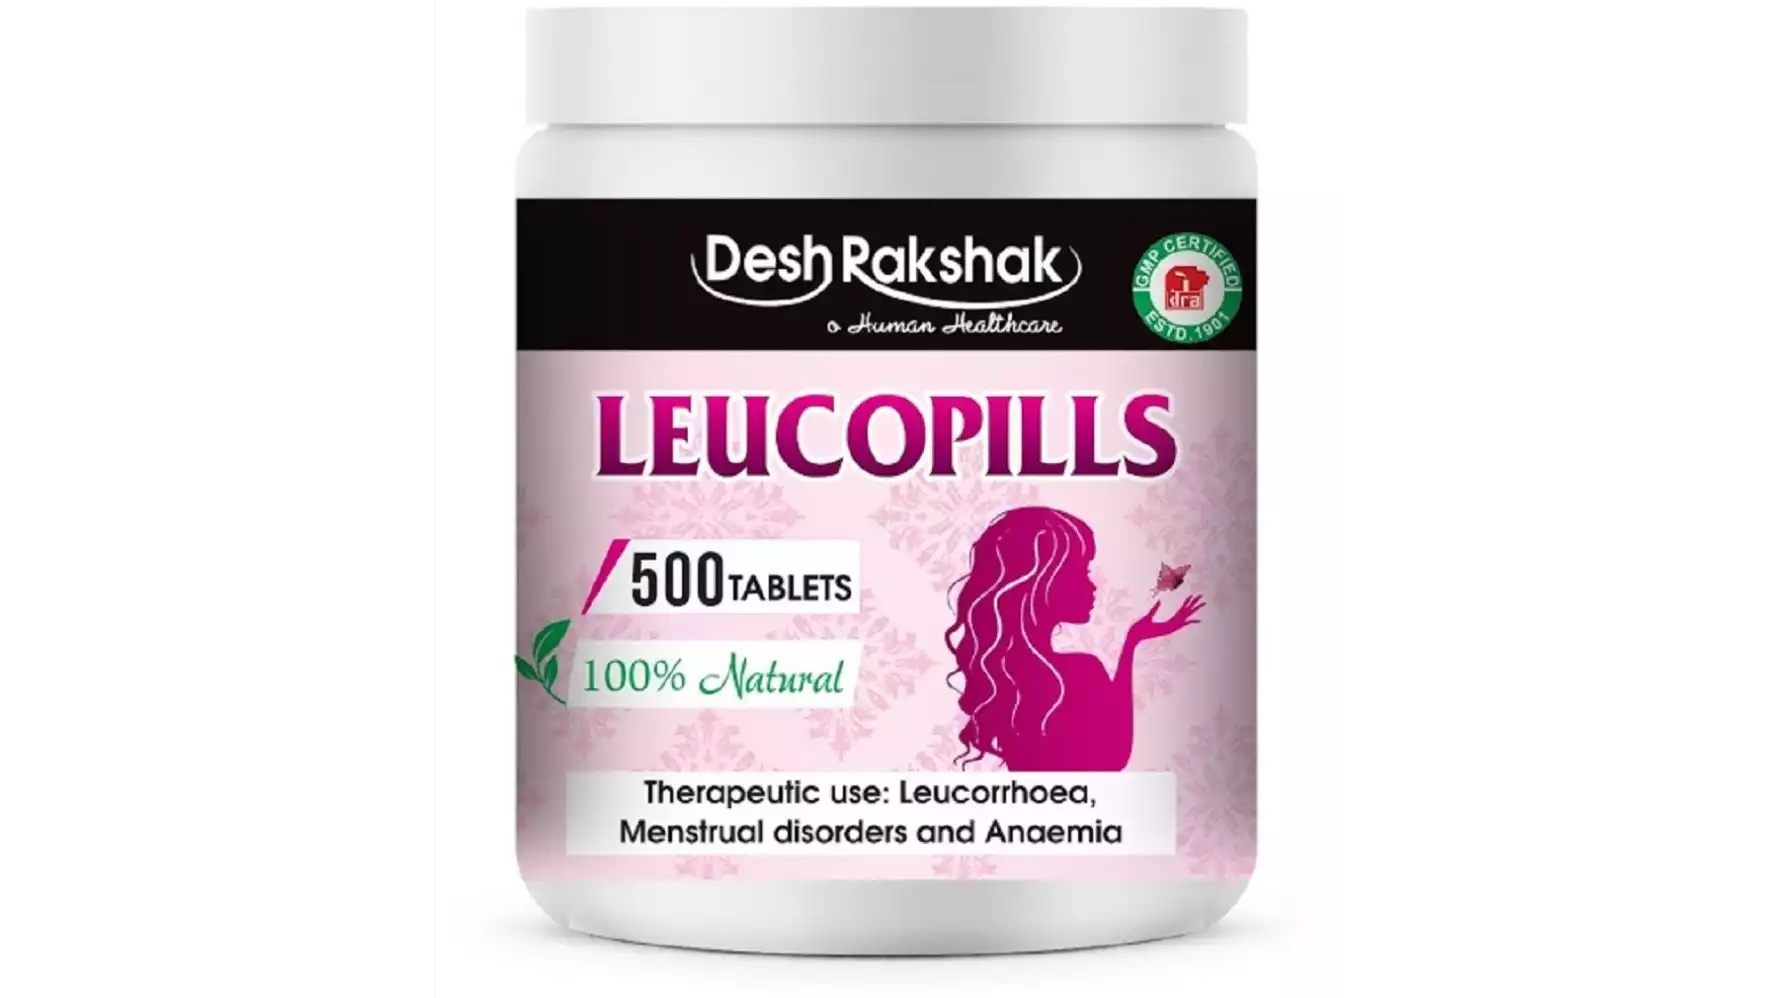 Deshrakshak Leucopills (500tab)